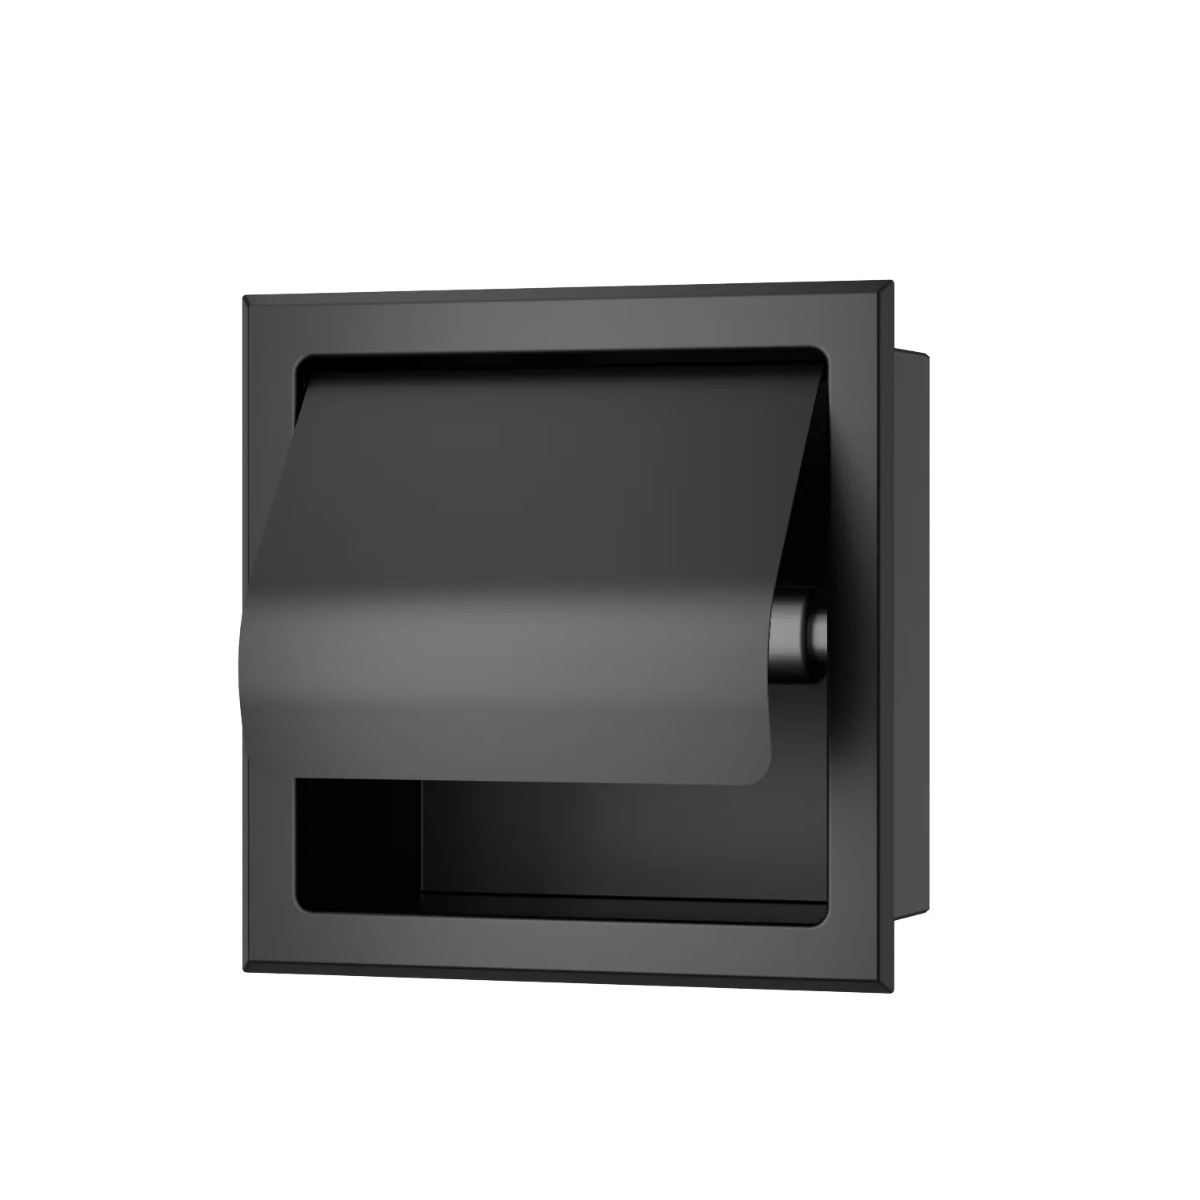 Sanifun Rocko toiletrolhouder met klep inbouw mat zwart